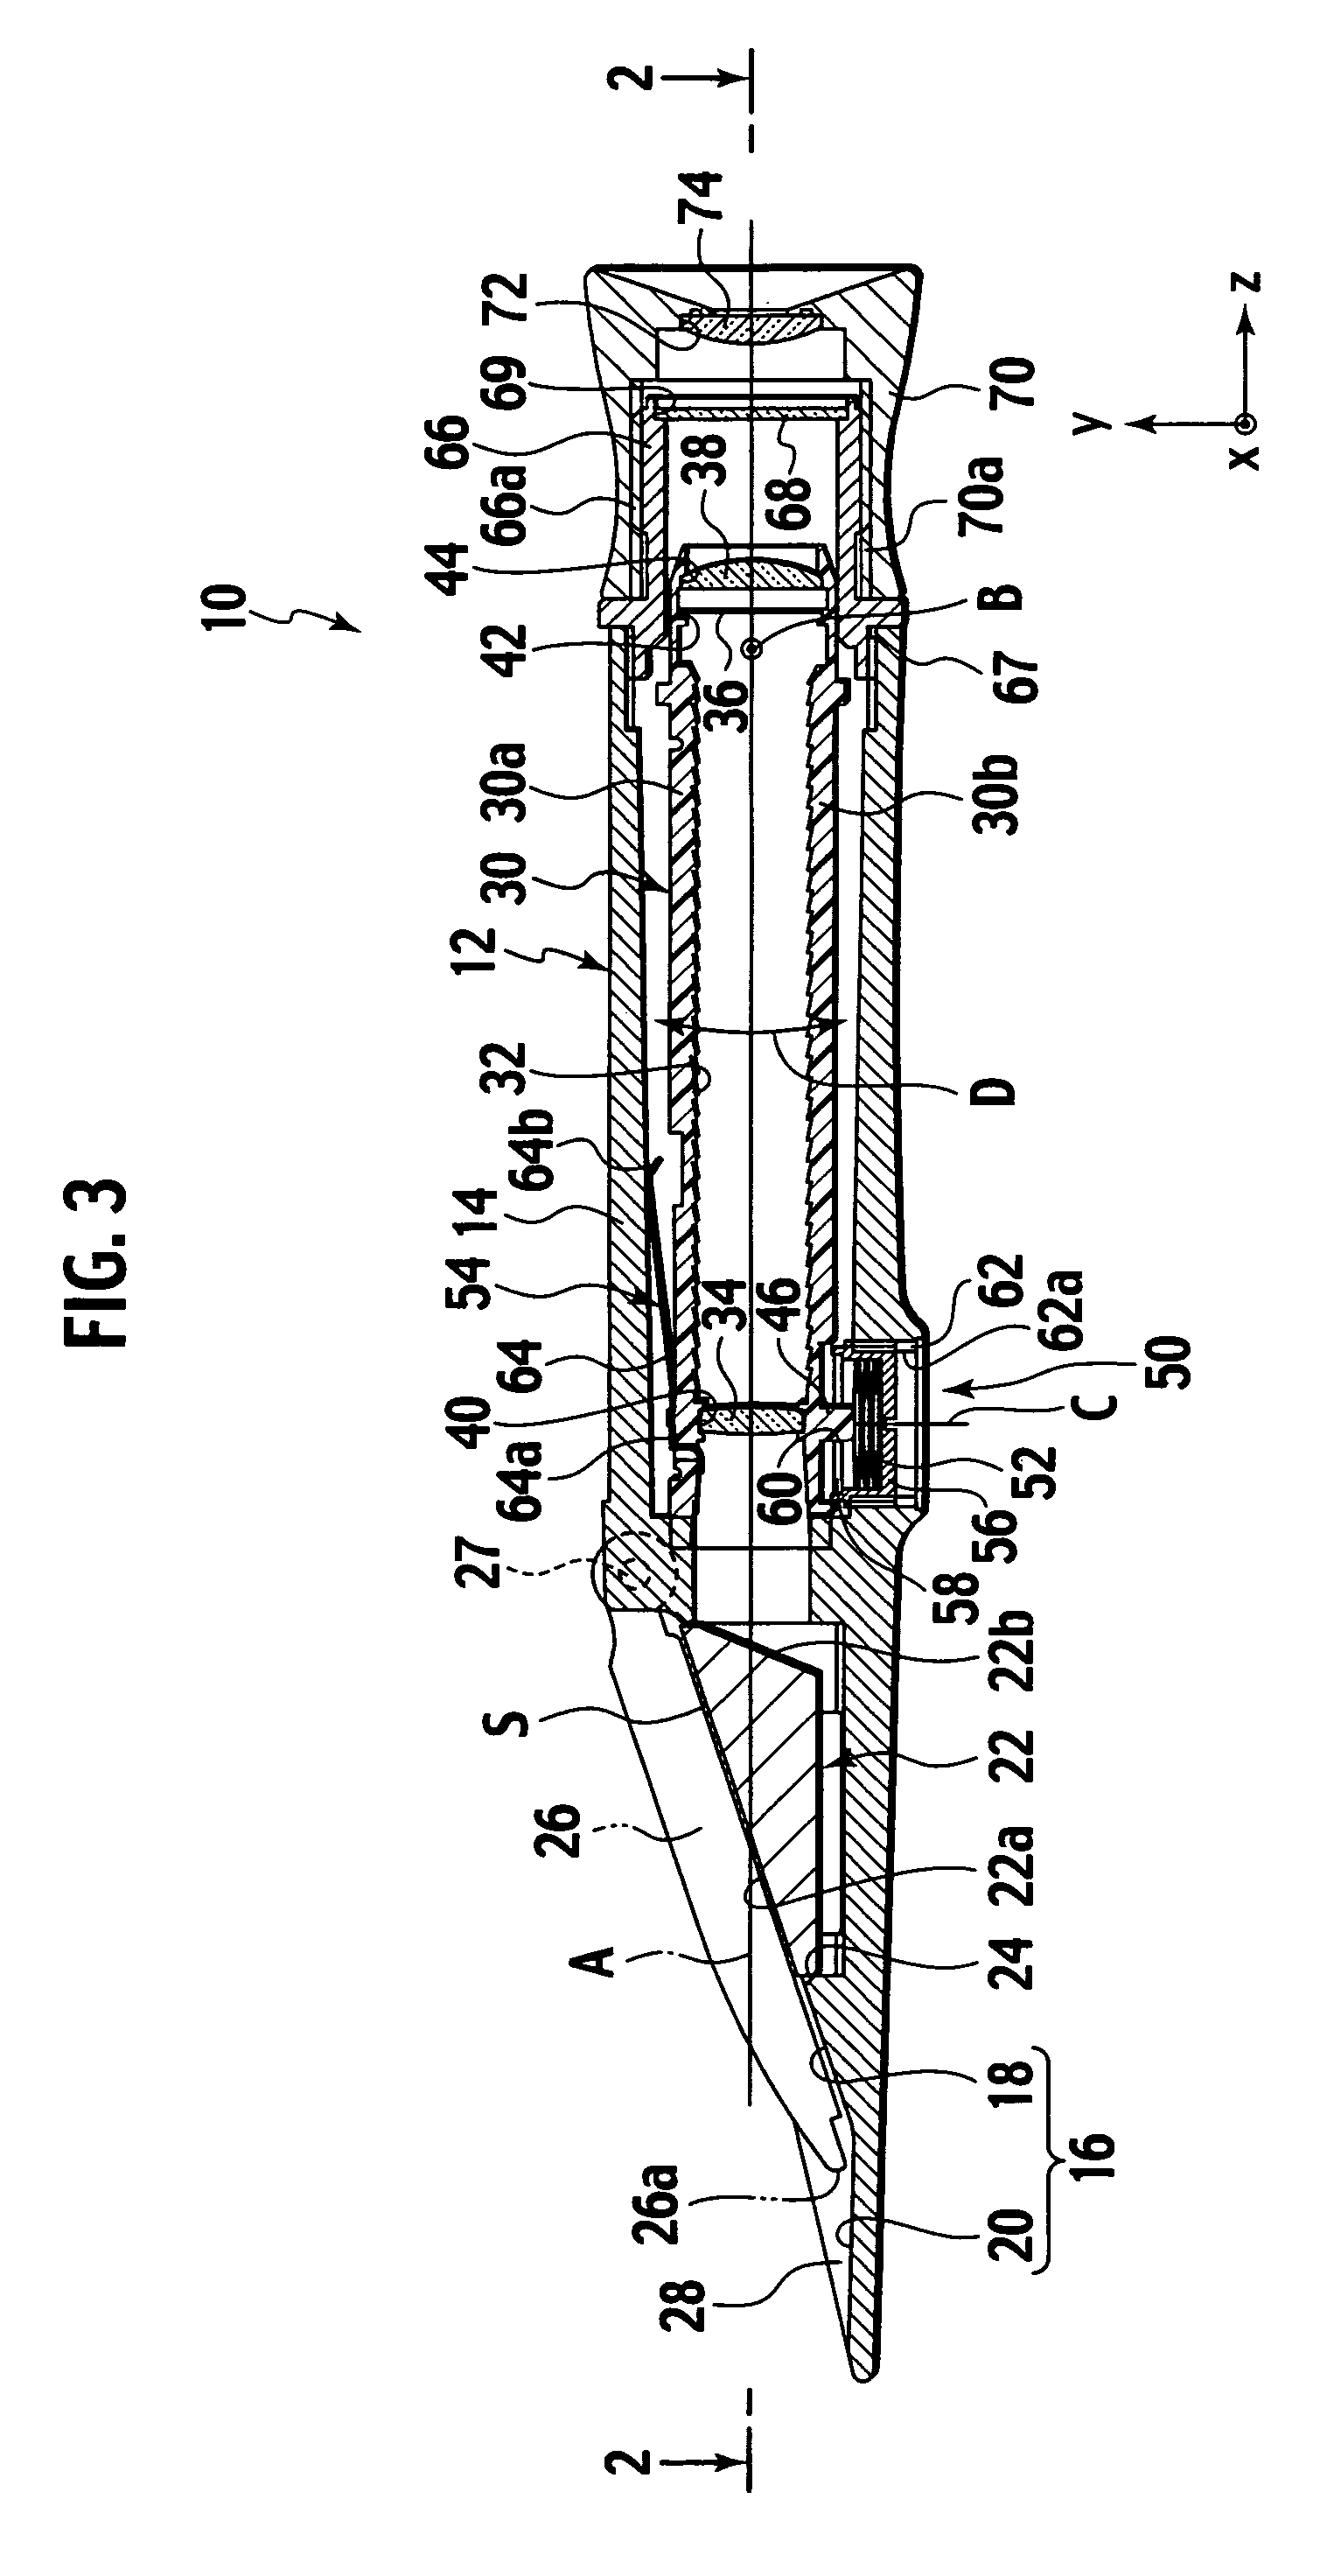 Portable refractometer